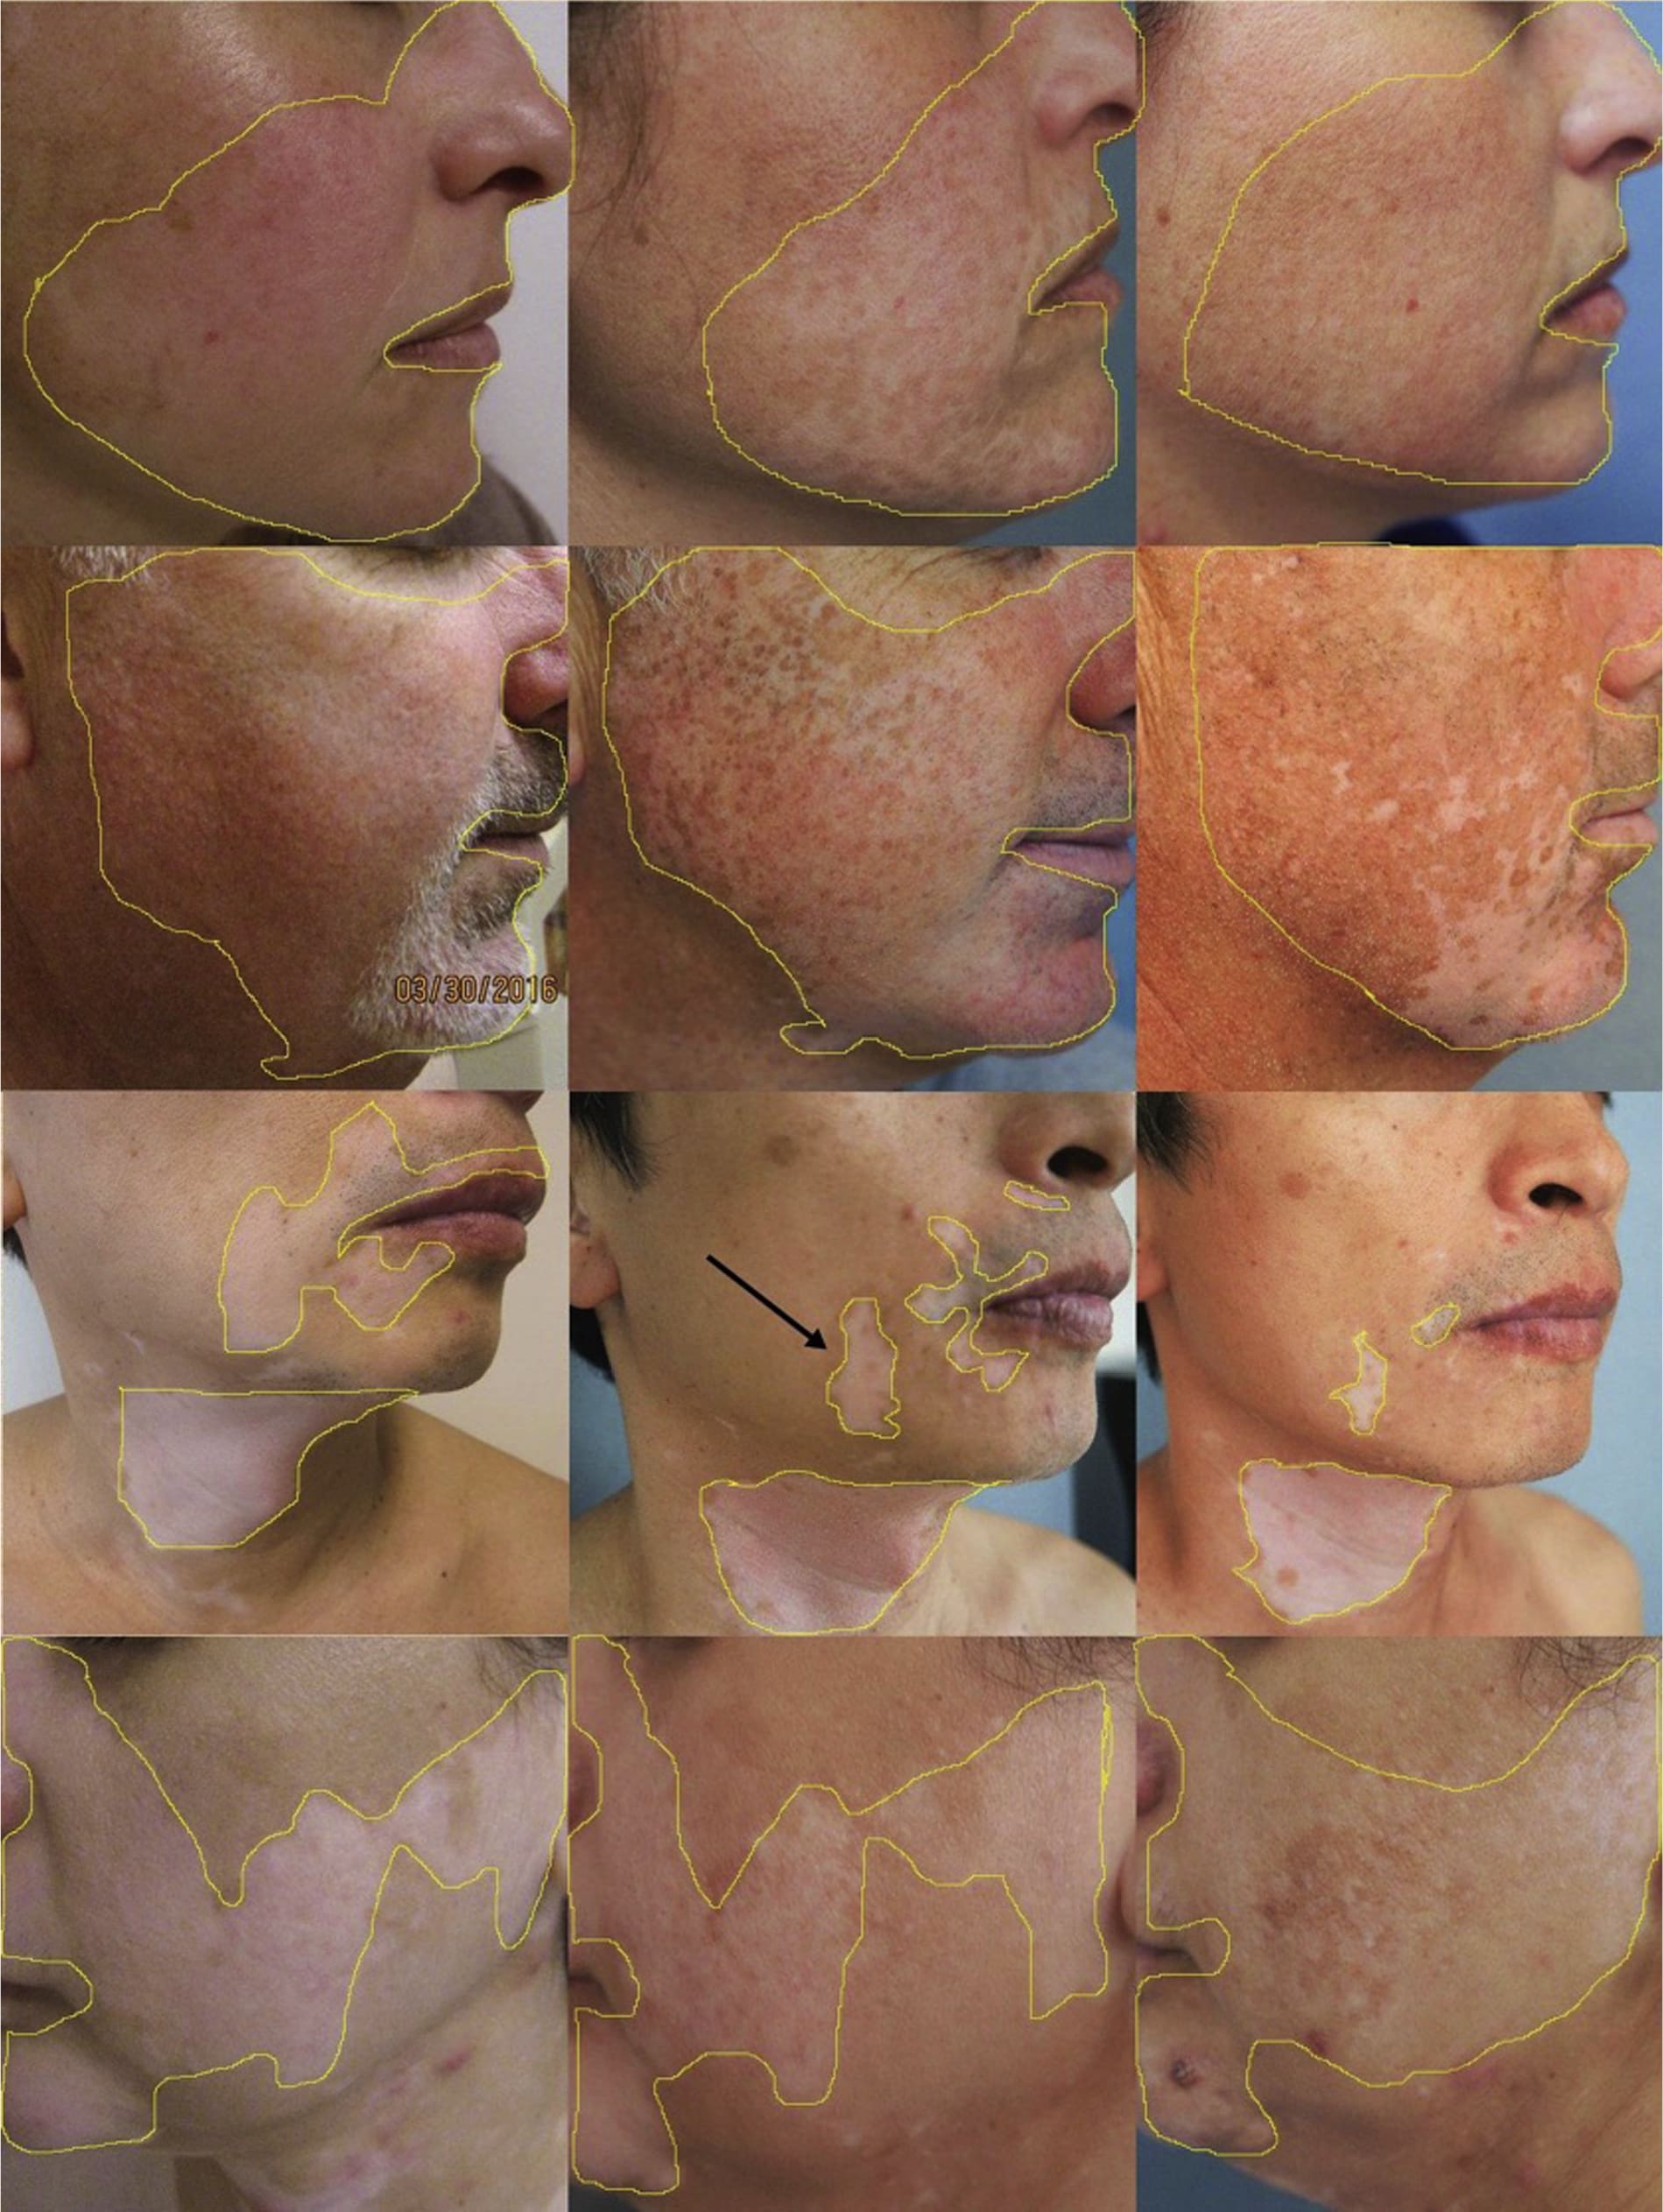 ruxolitinib vitiligo results 04 - Opzelura: New Treatment for Vitiligo